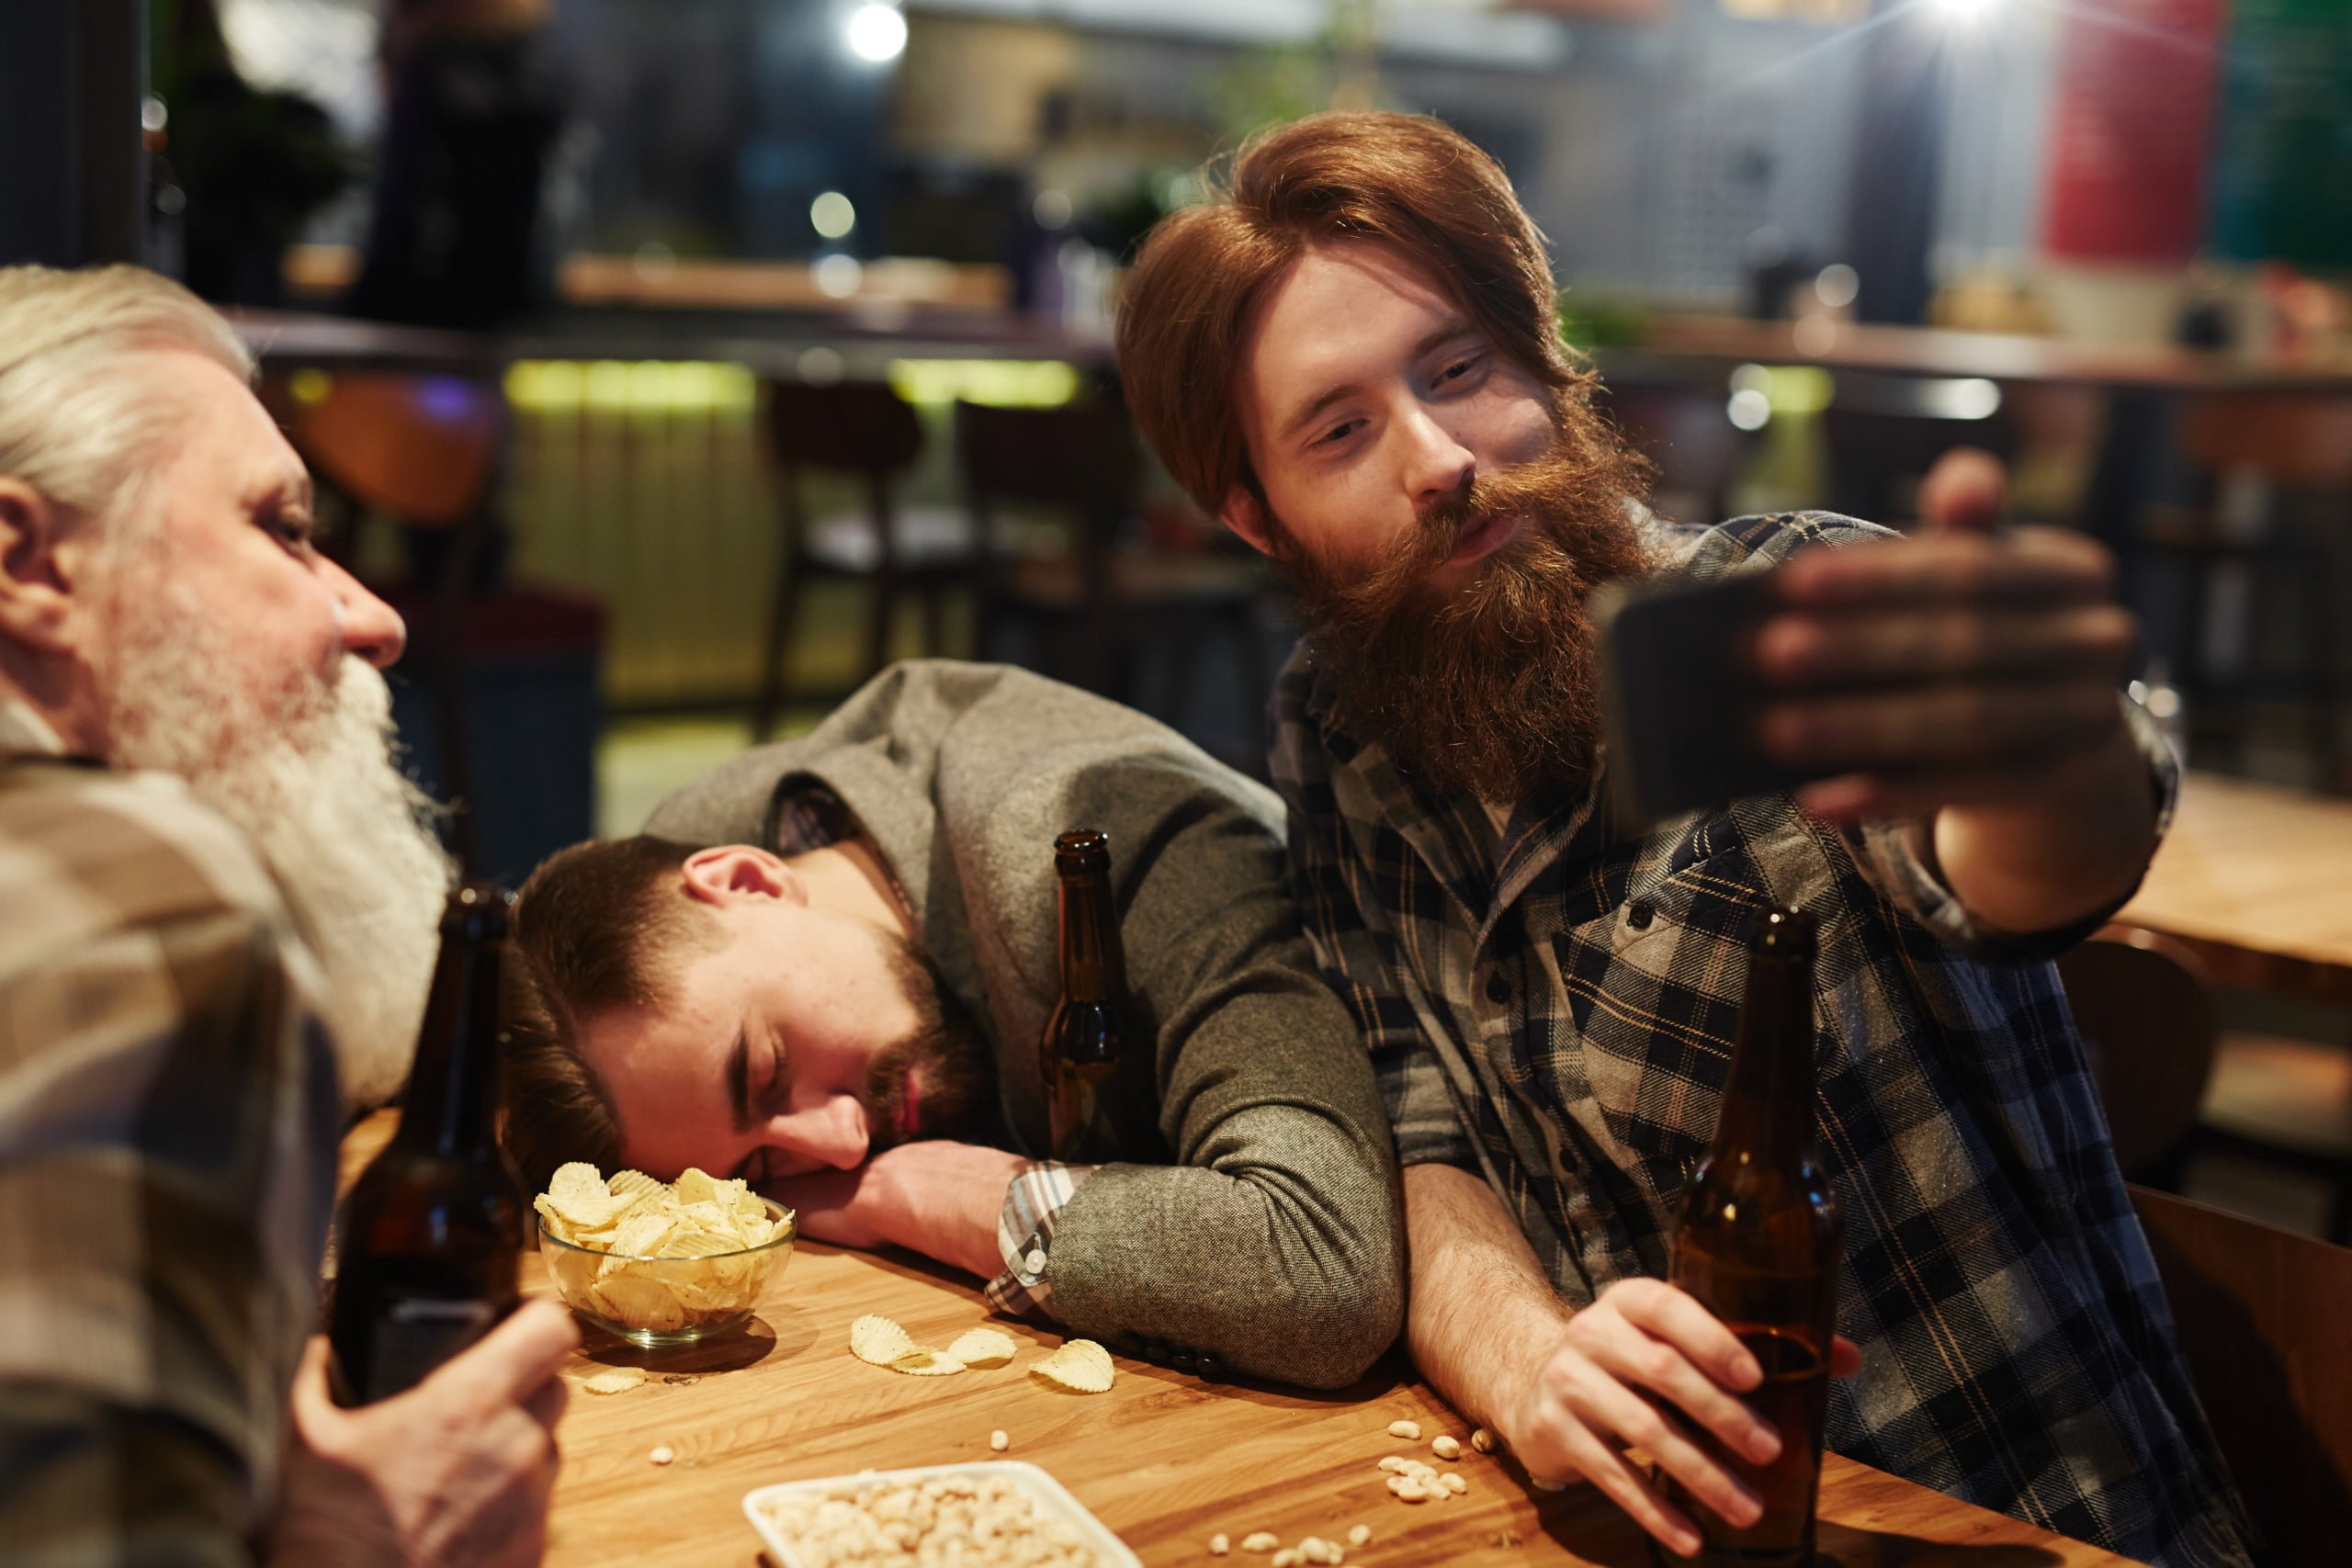 Man taking a selfie with a drunk man